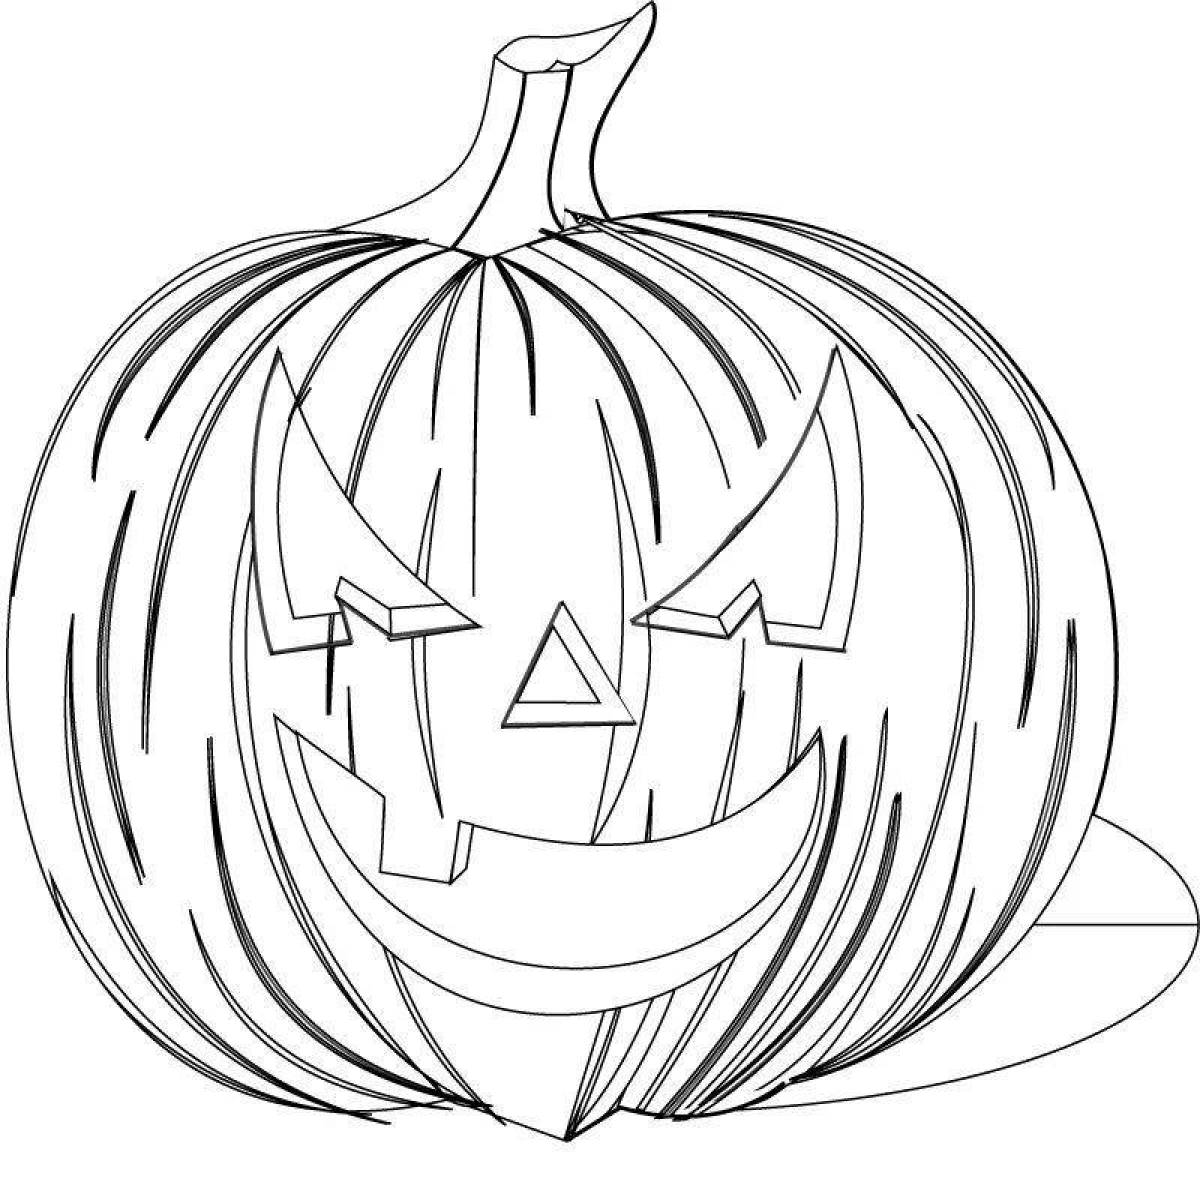 Fun Halloween pumpkin coloring page